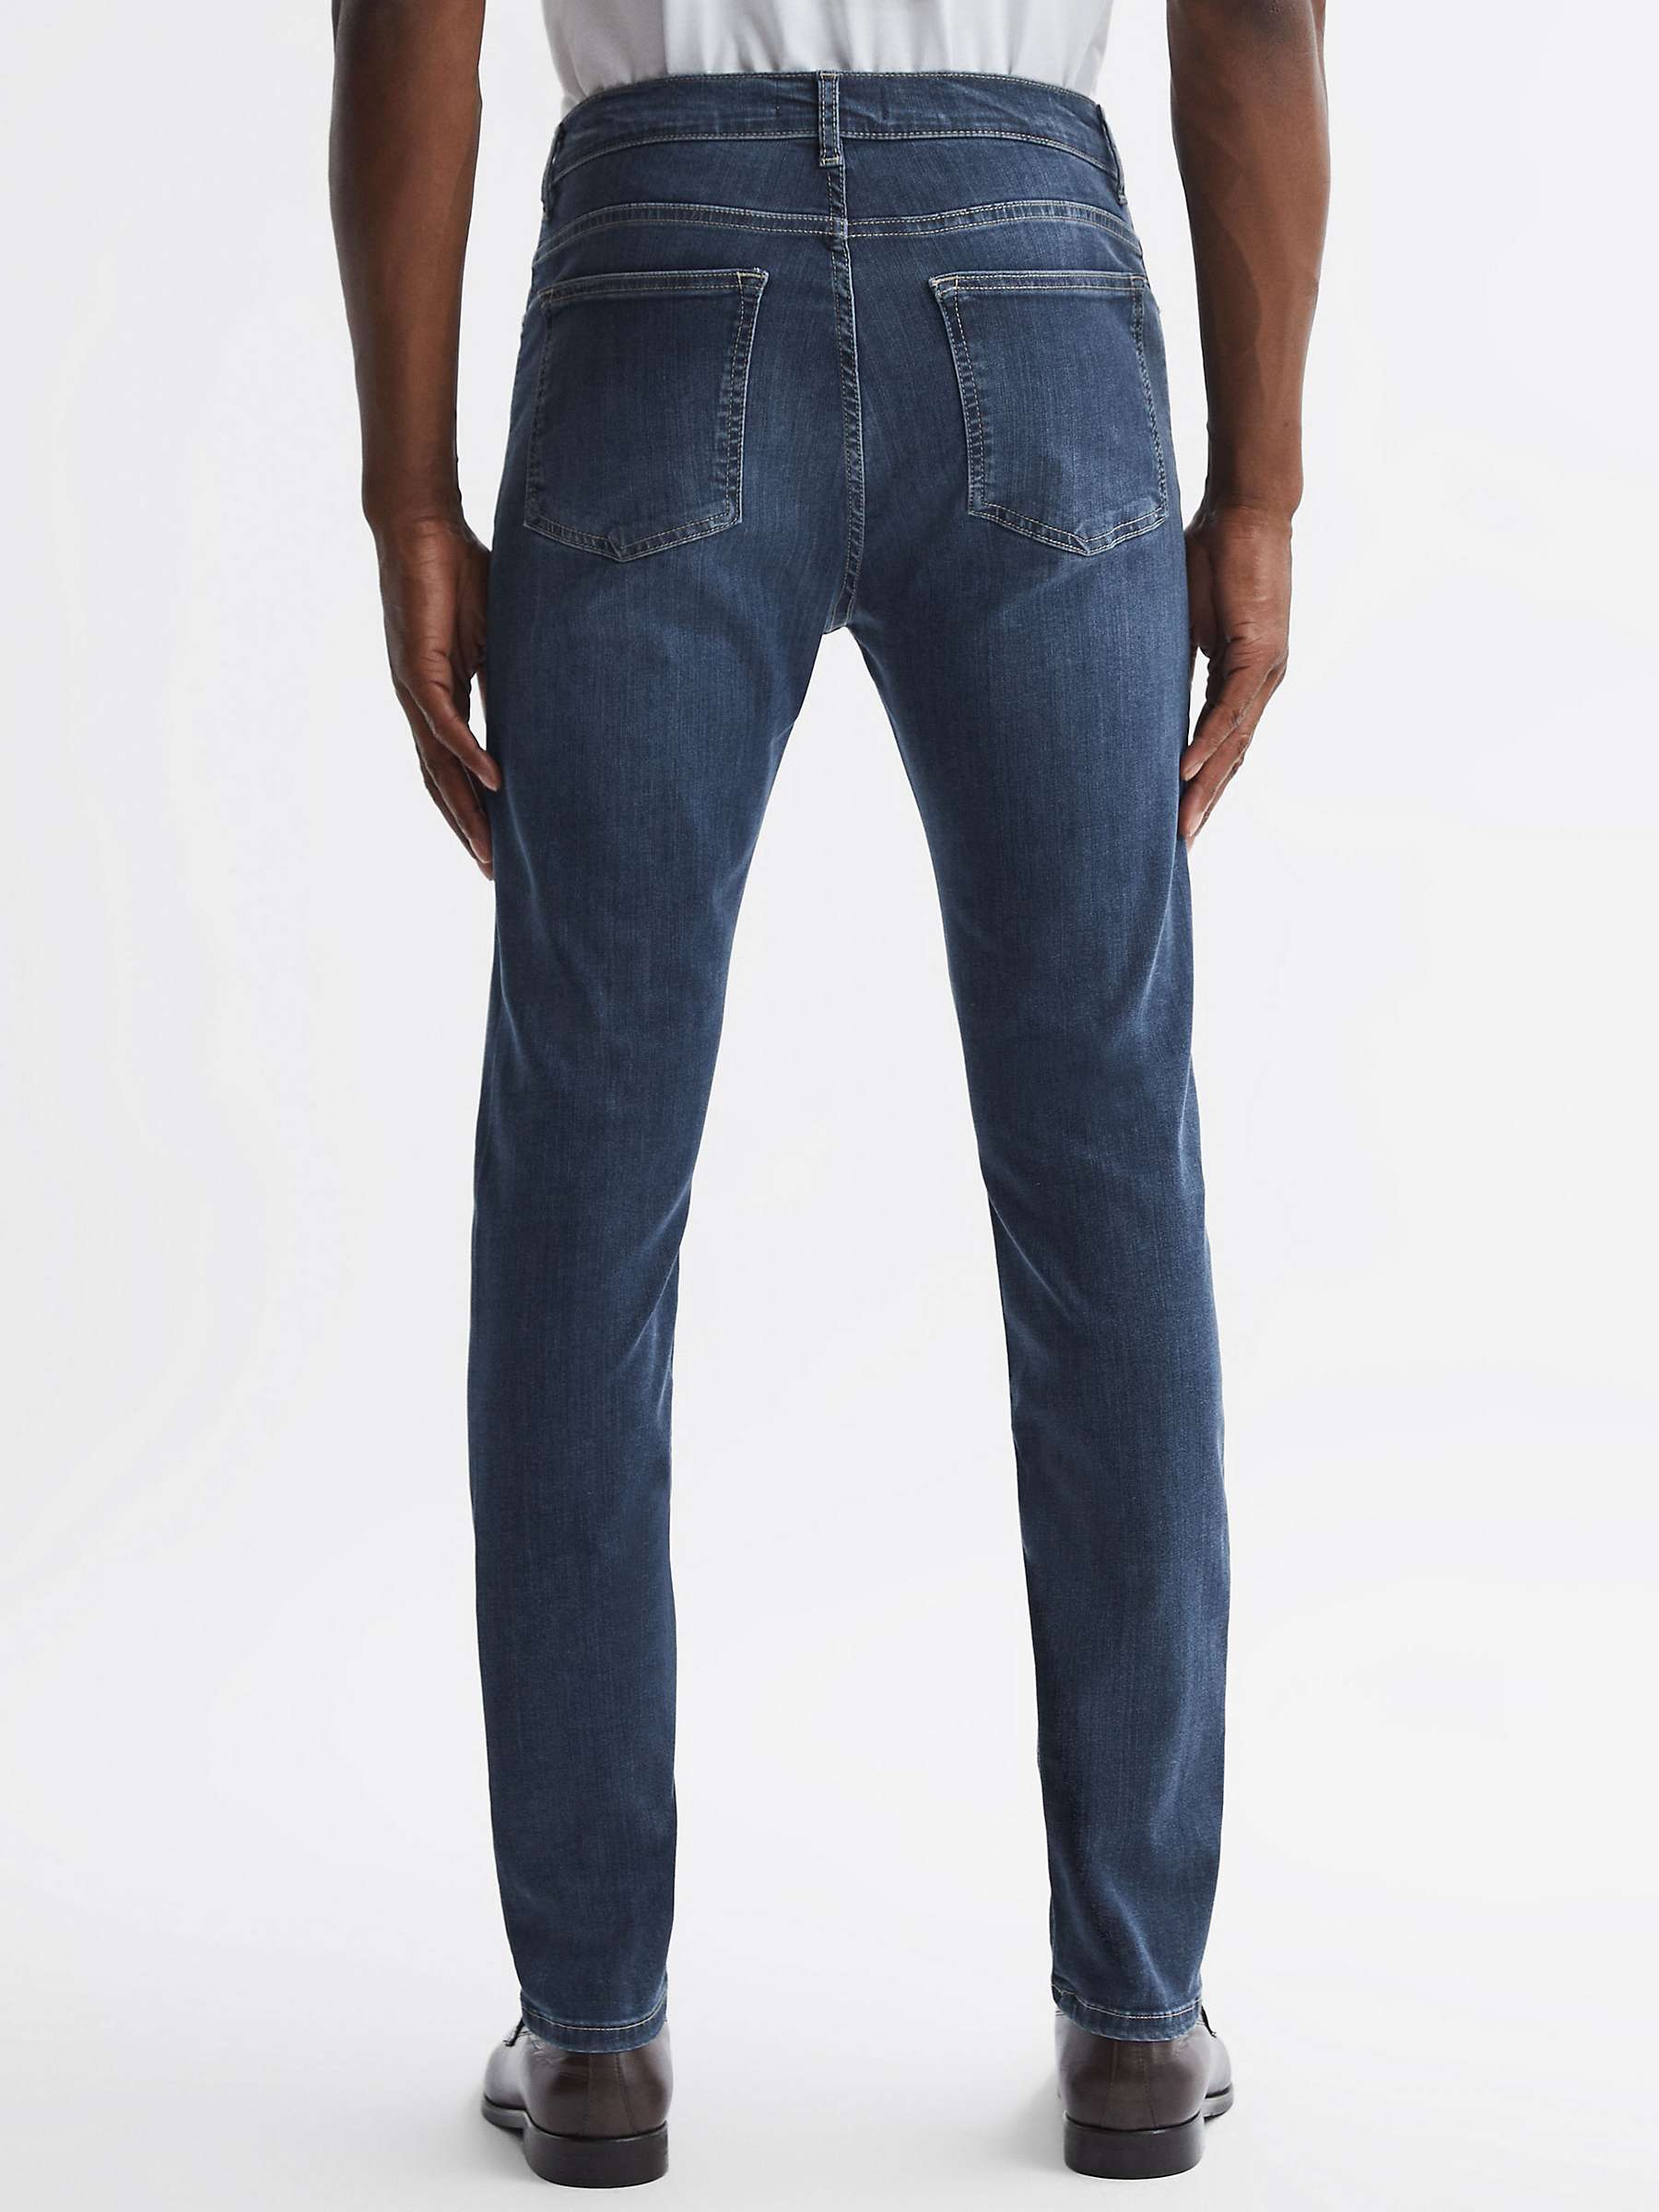 Reiss James Jersey Slim Fit Jeans, Indigo at John Lewis & Partners